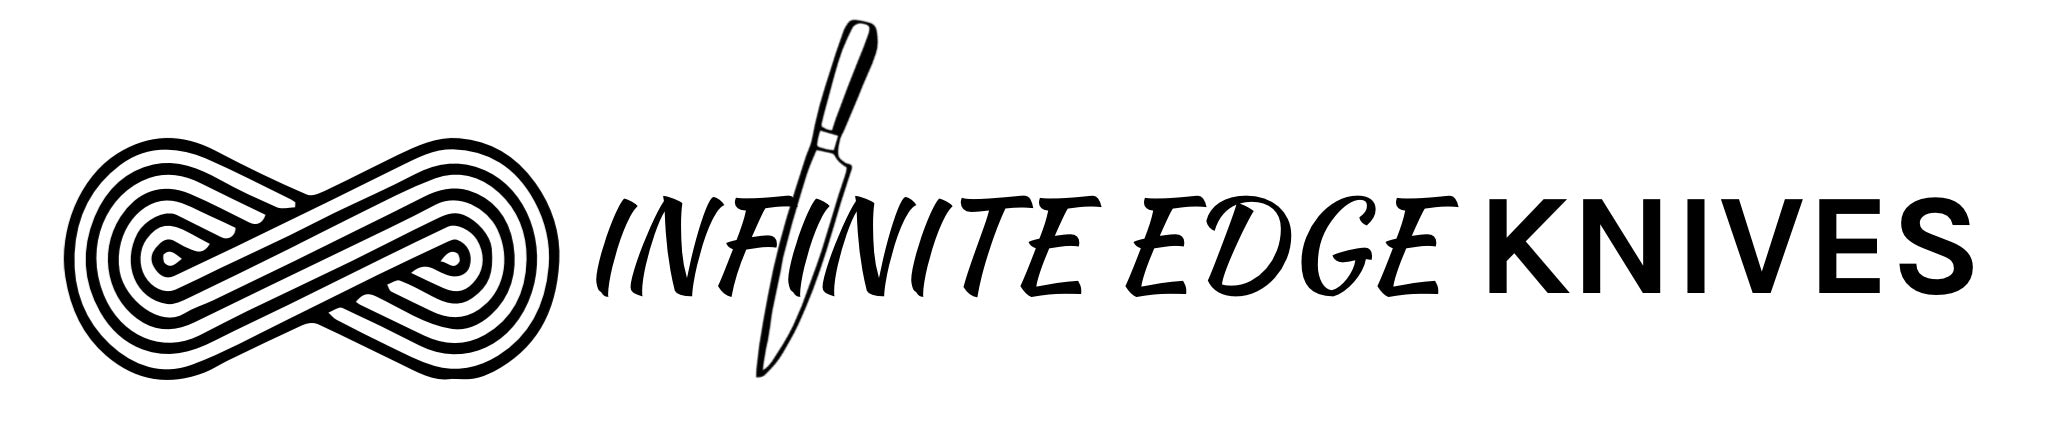 Infinite edge knives